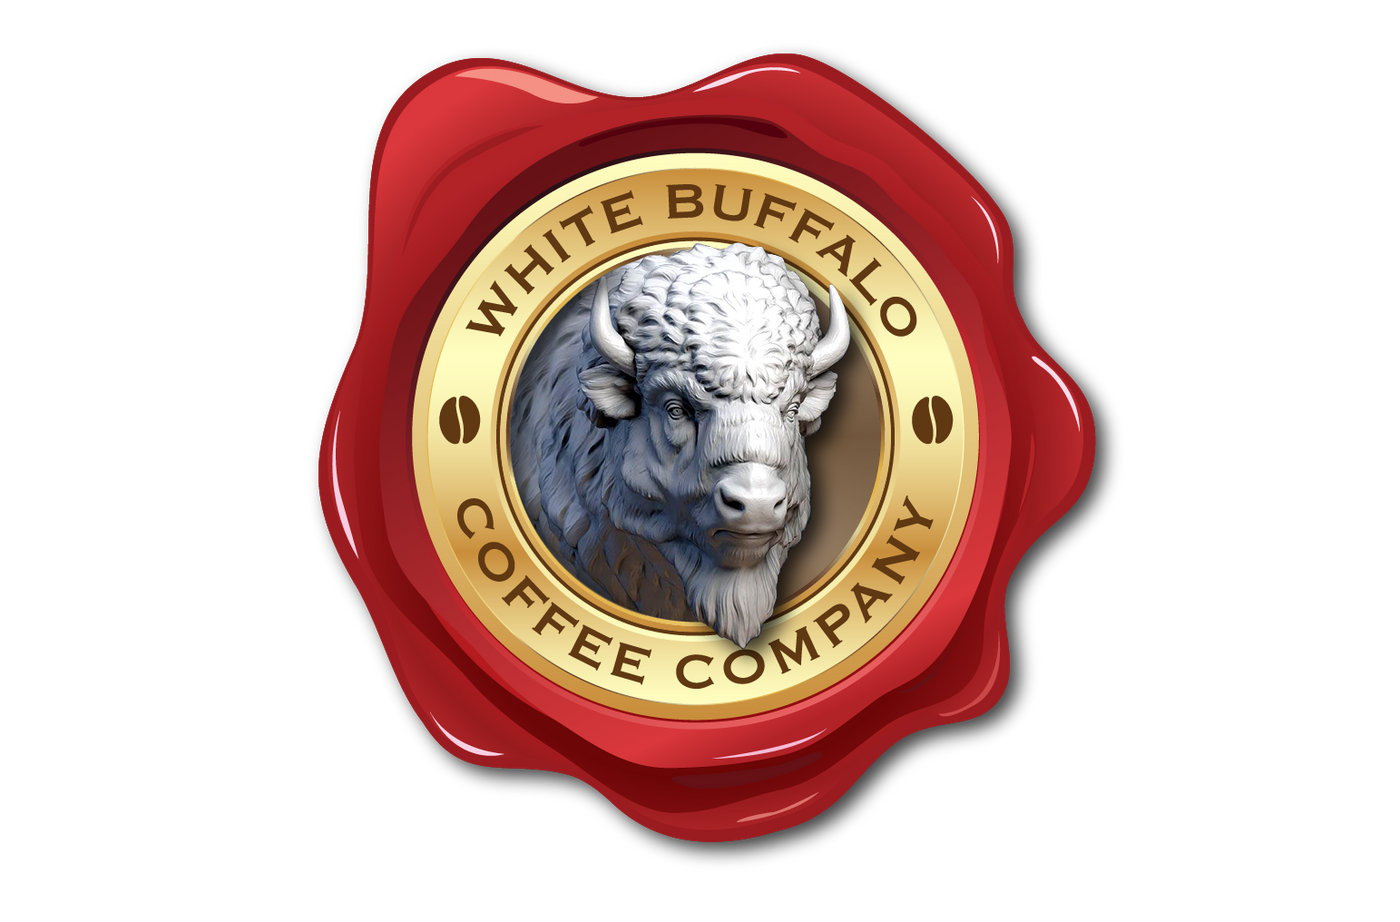 White Buffalo Coffee Company Gift Card